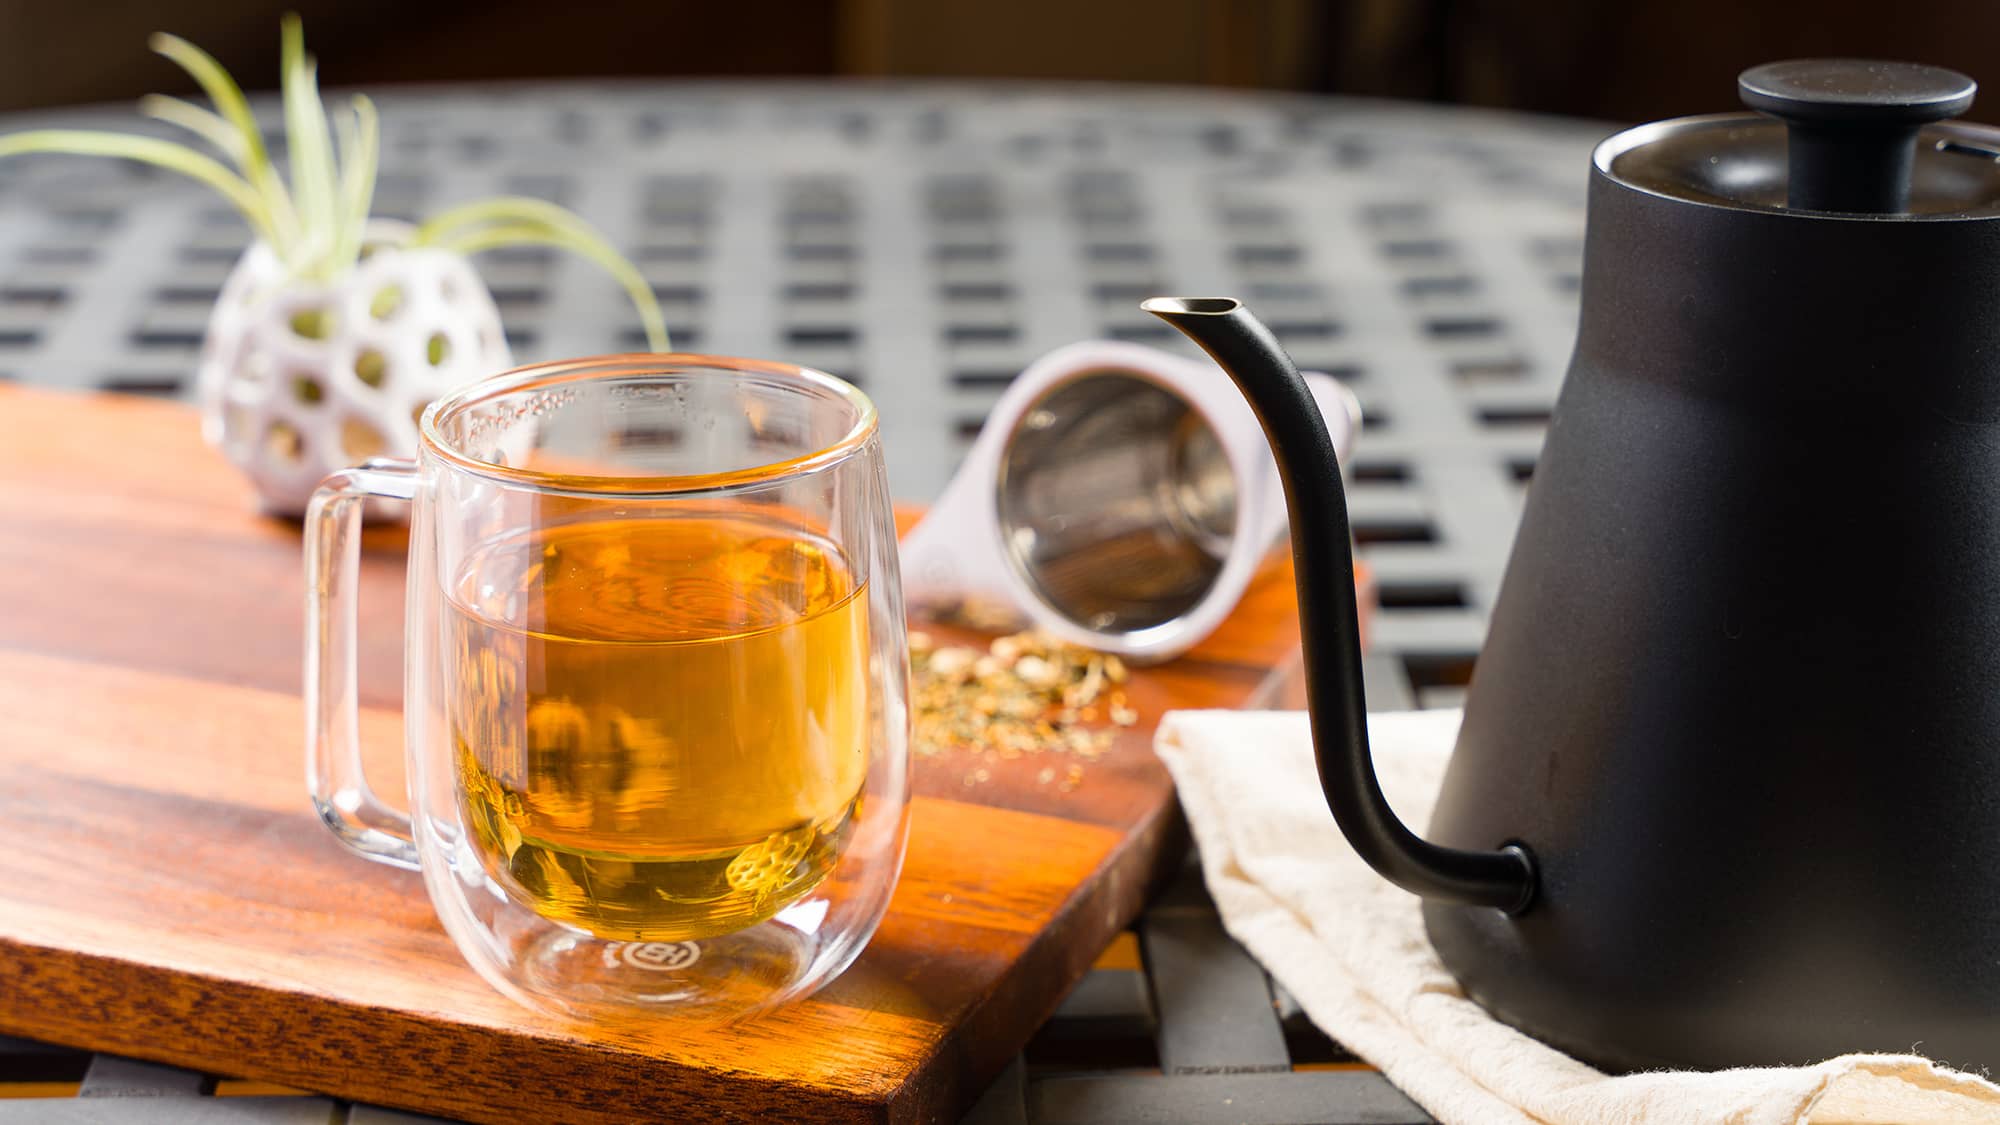 Homemade tea on a table with double walled glass tea mug.